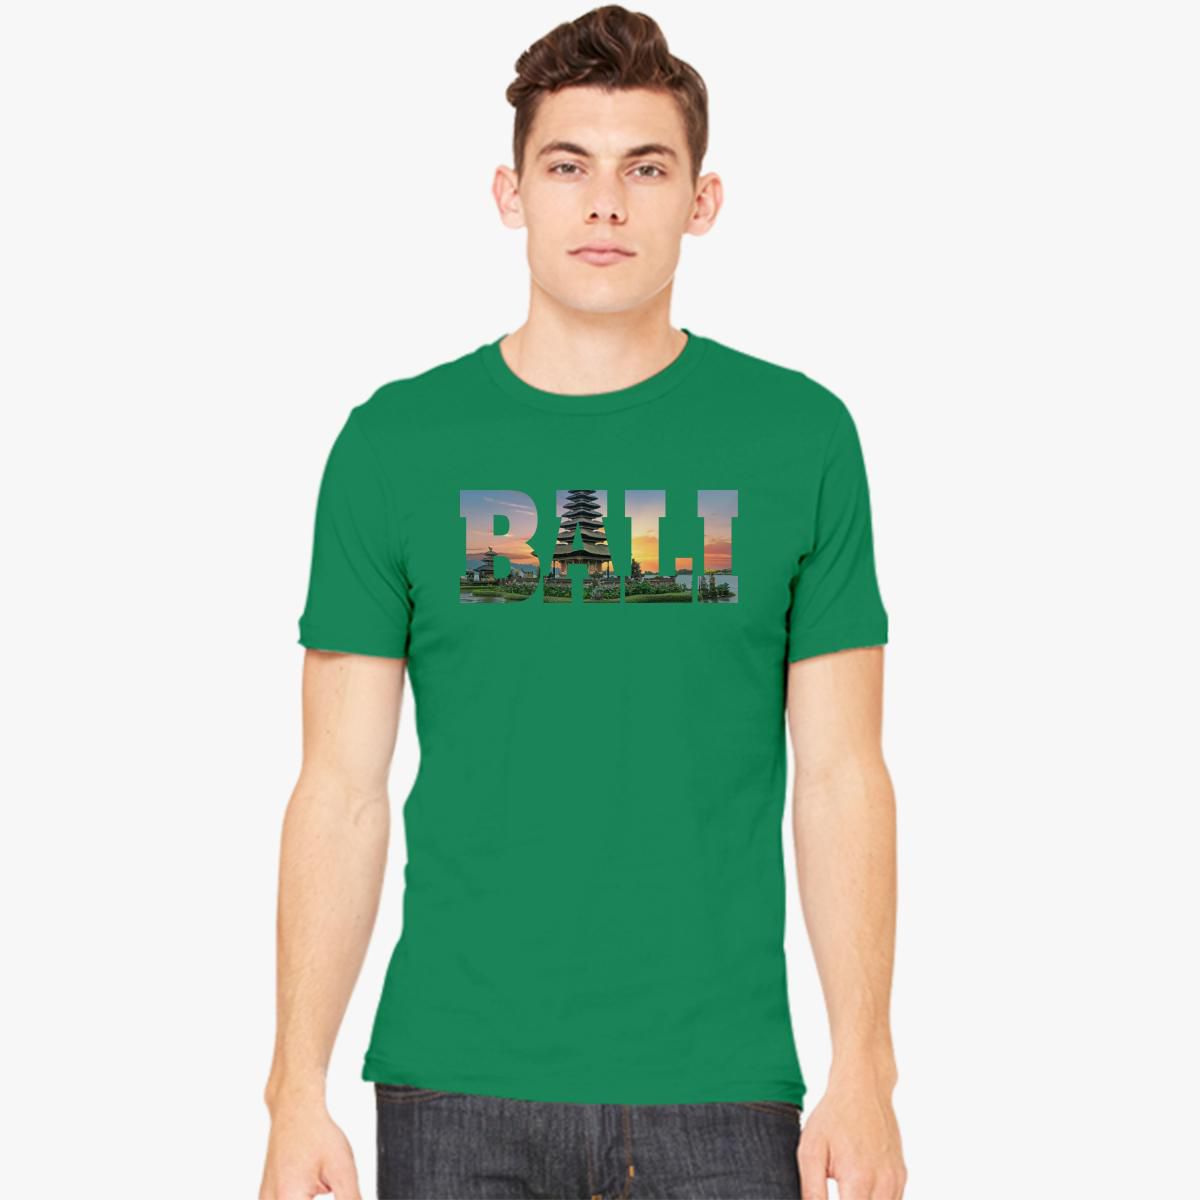  BALI  001 Men s T shirt  Customon